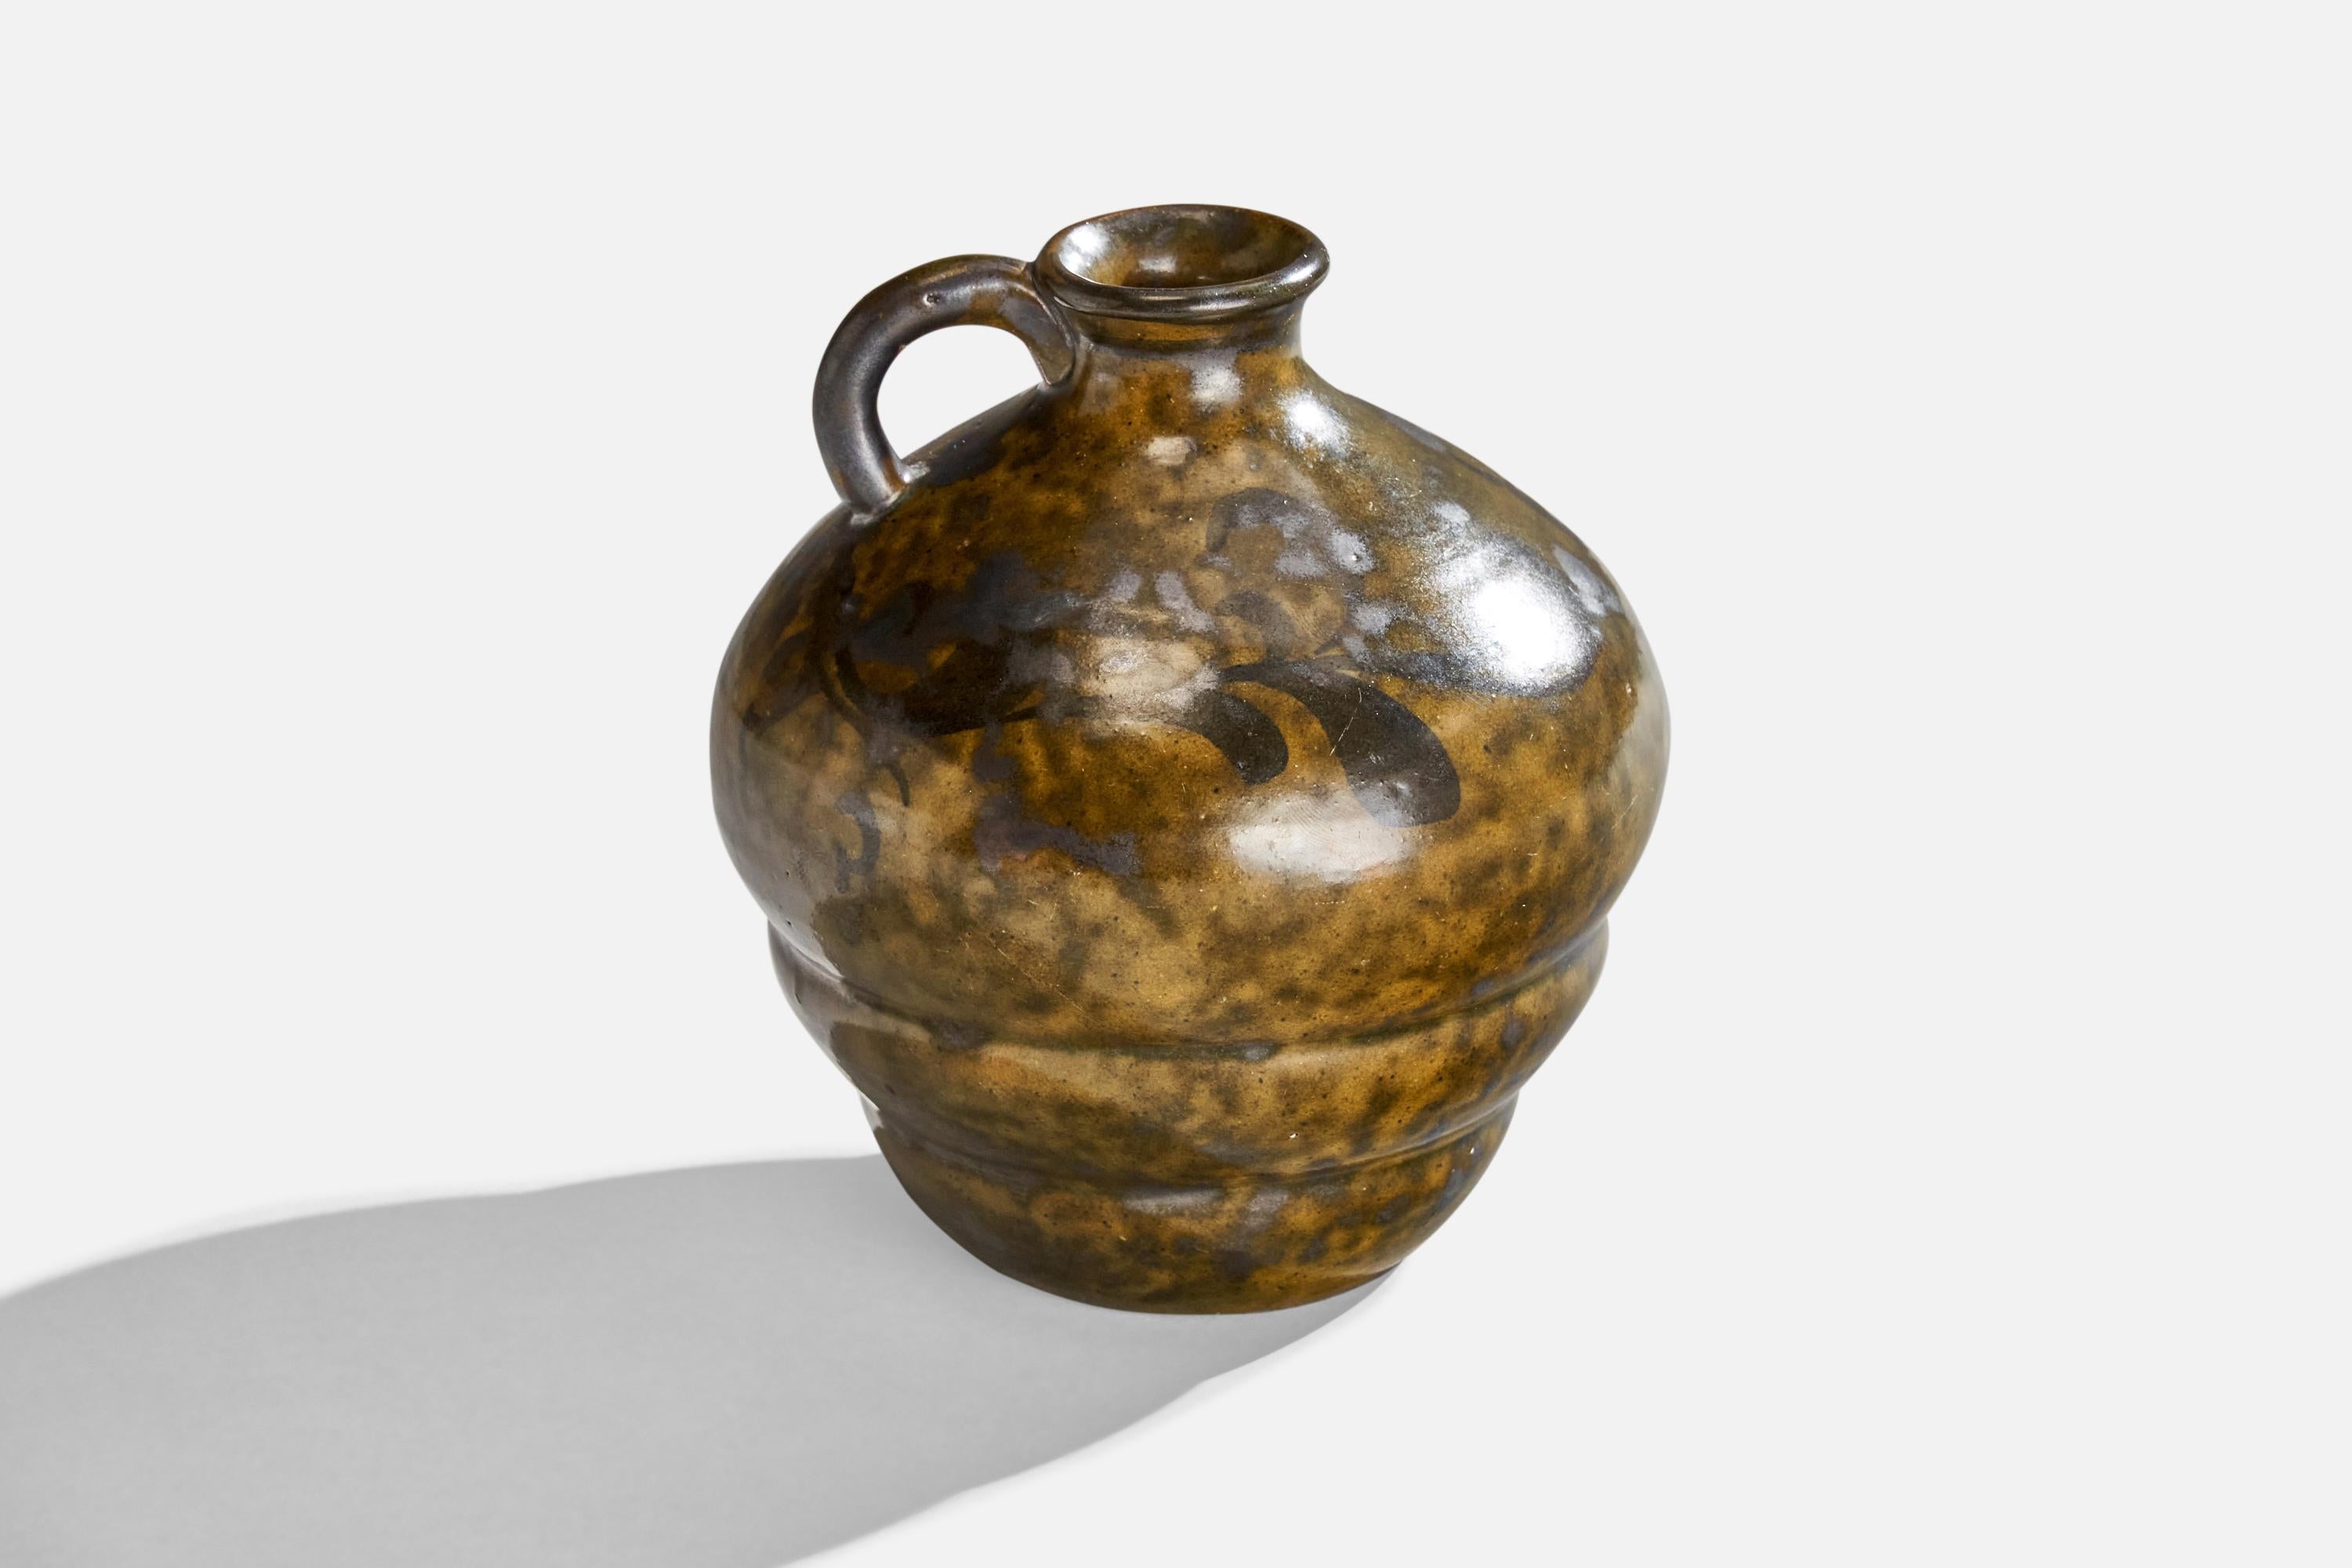 A black and beige-glazed ceramic pitcher designed and produced by Nittsjö, Sweden, 1930s.